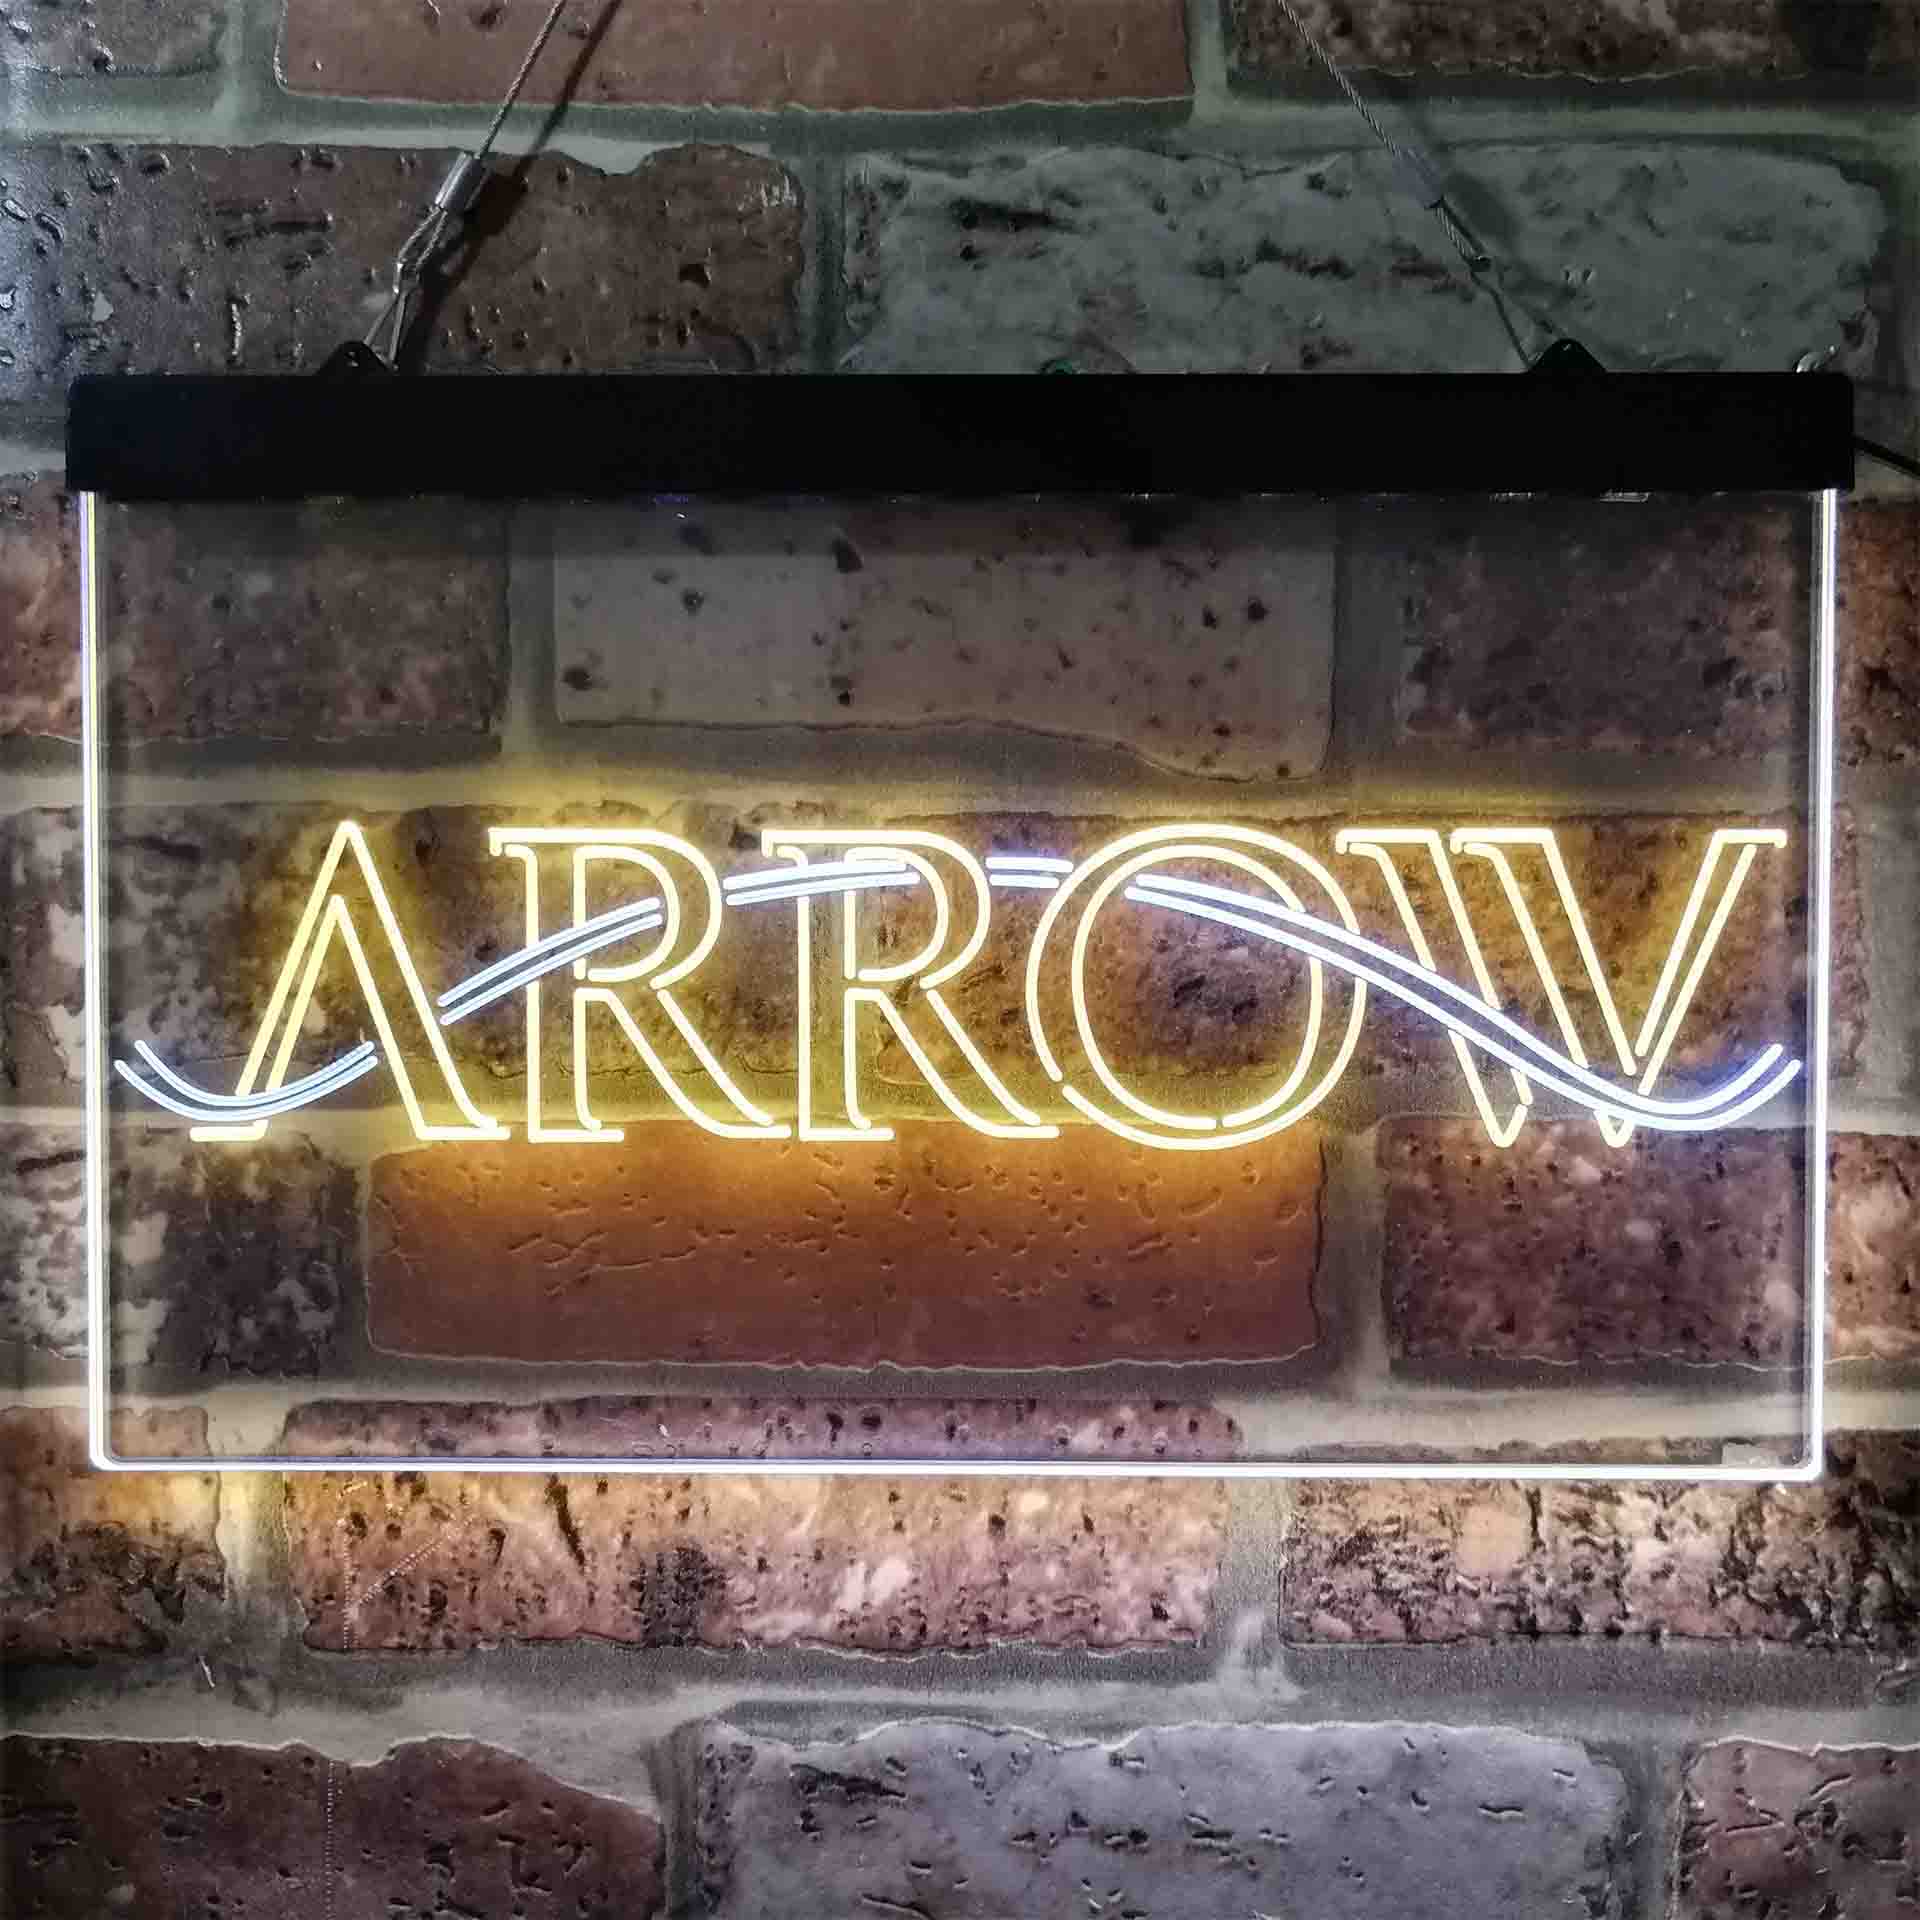 DC Comics Green Arrow Game Room Neon Light LED Sign